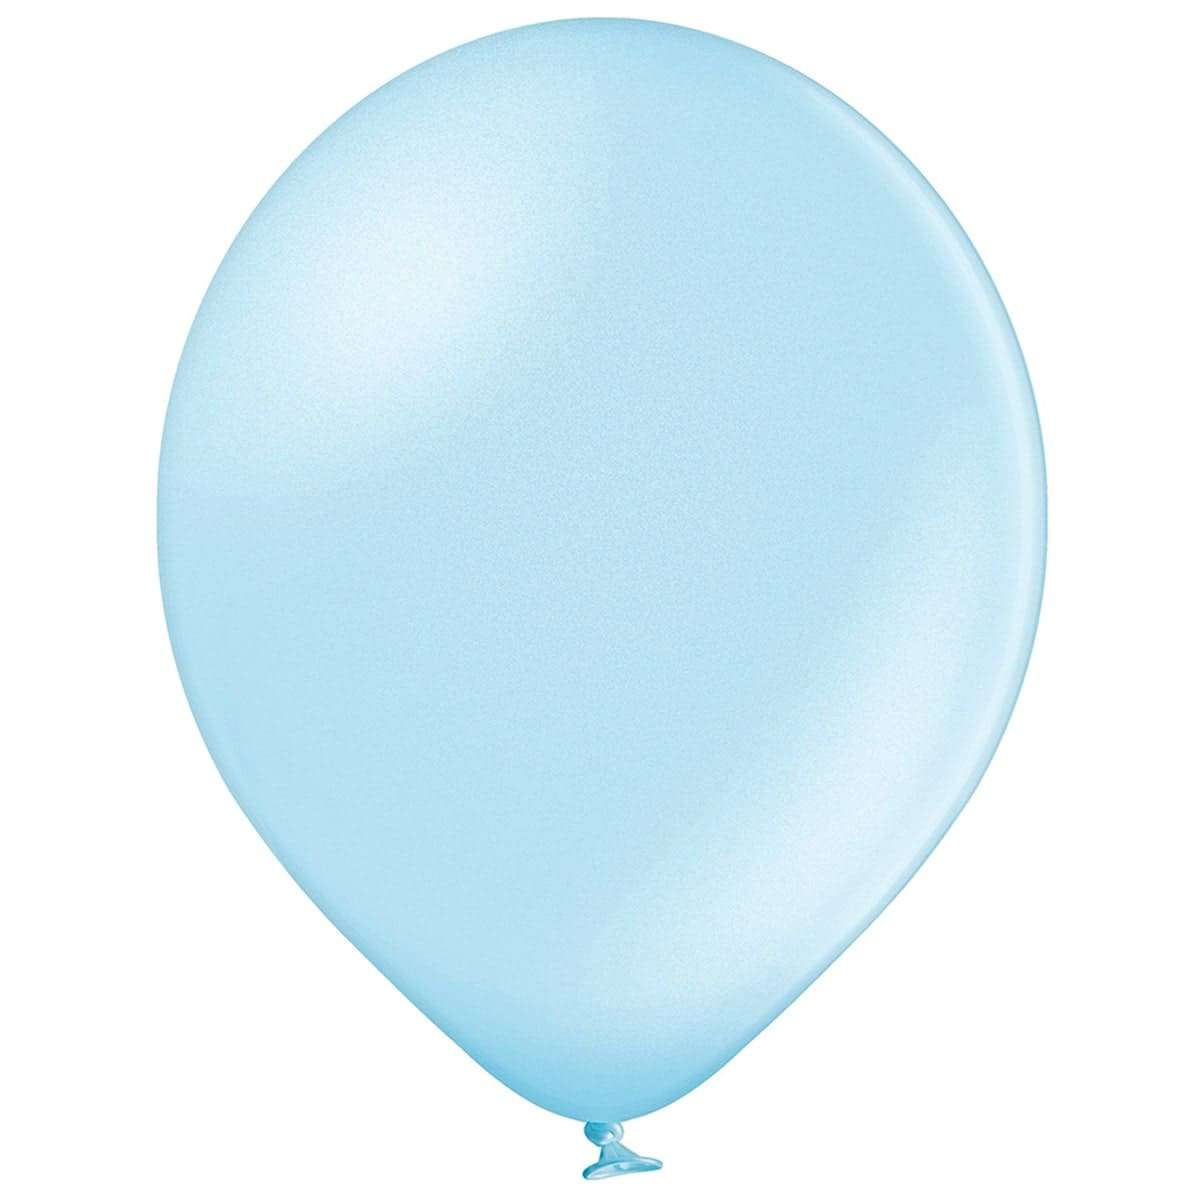 Голубой шарик с гелием 33см Бельгия картинка 2